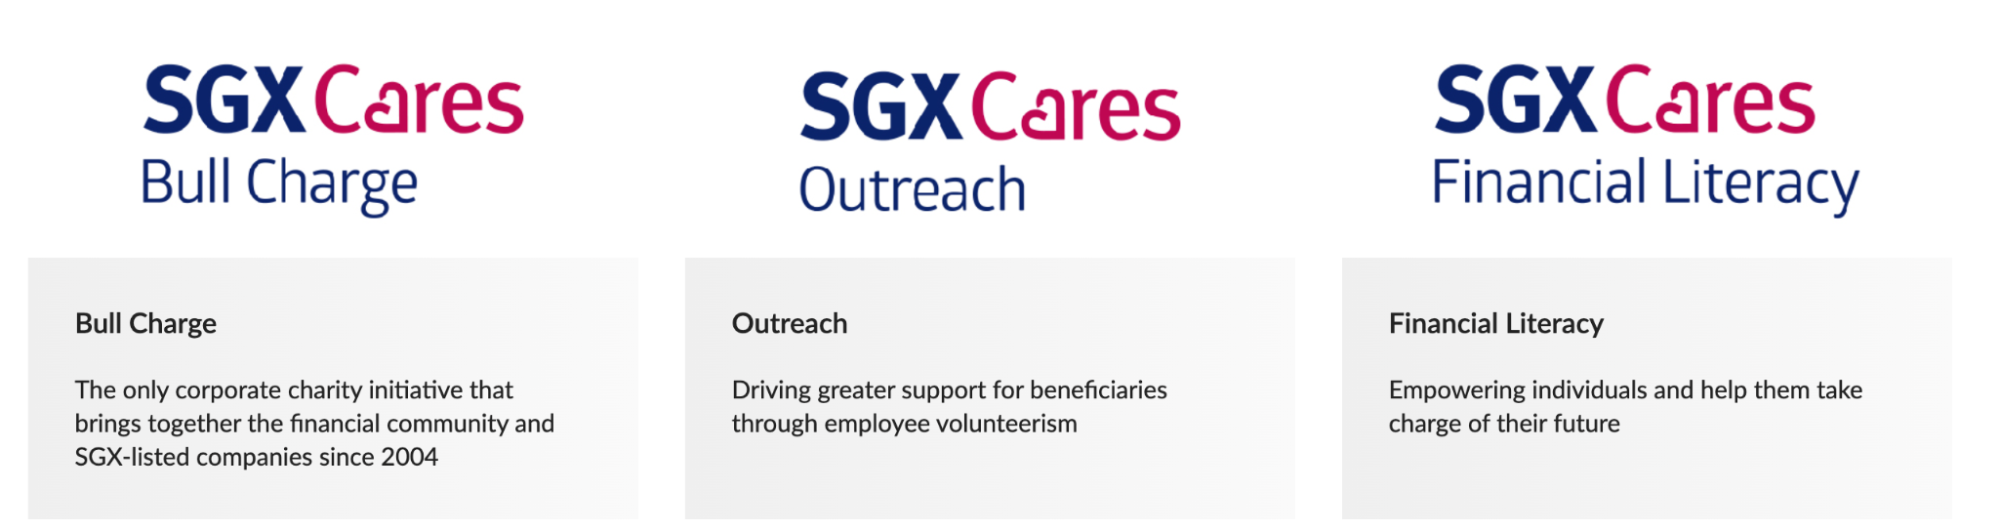 SGX Cares 2022 - Image 4